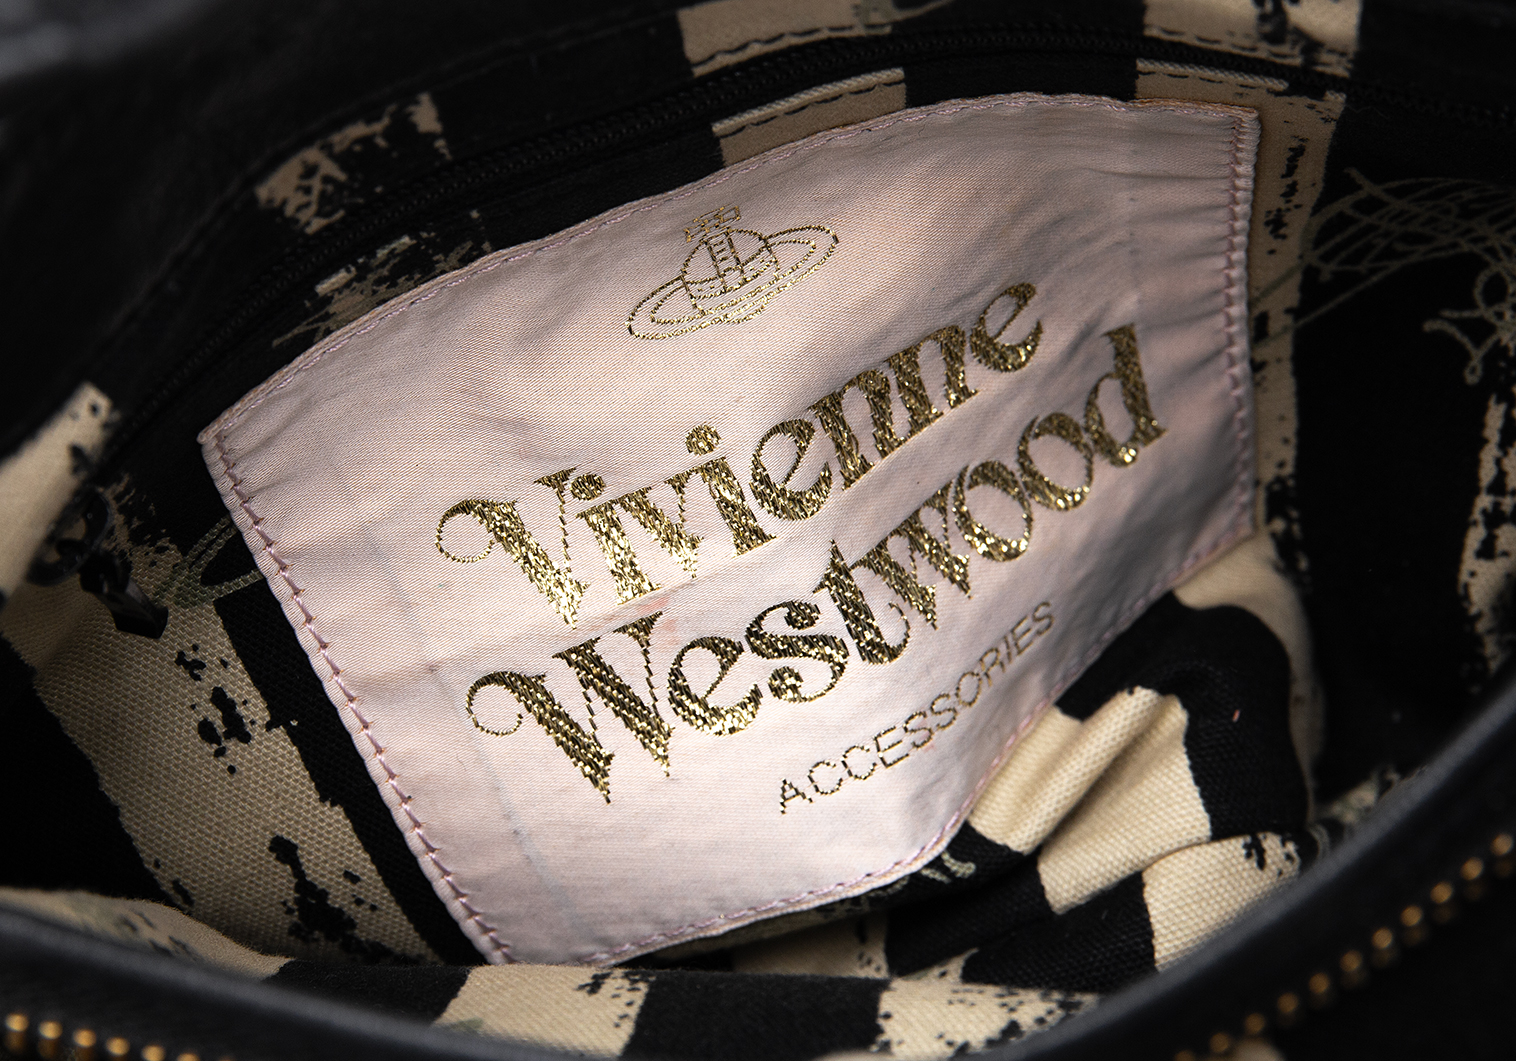 Vivienne Westwood 本革メッシュ編みトートバッグ ブラック（黒）